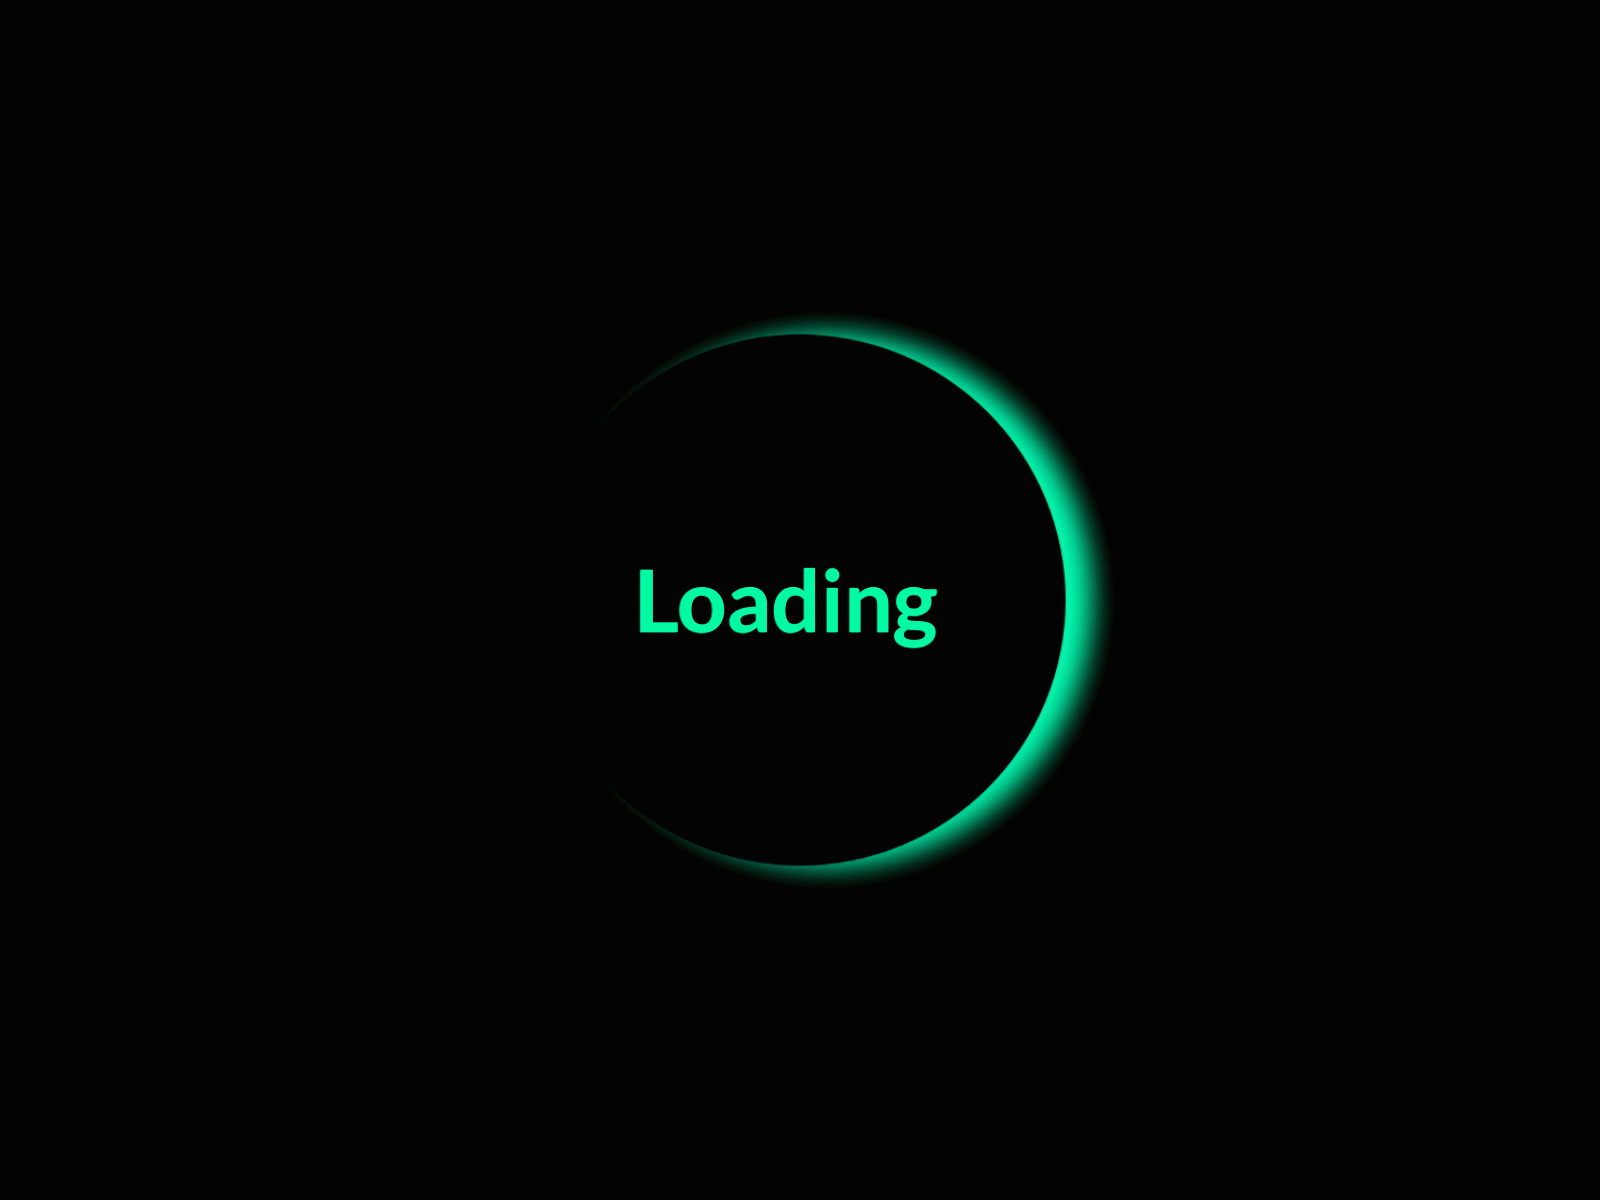 loading animation green